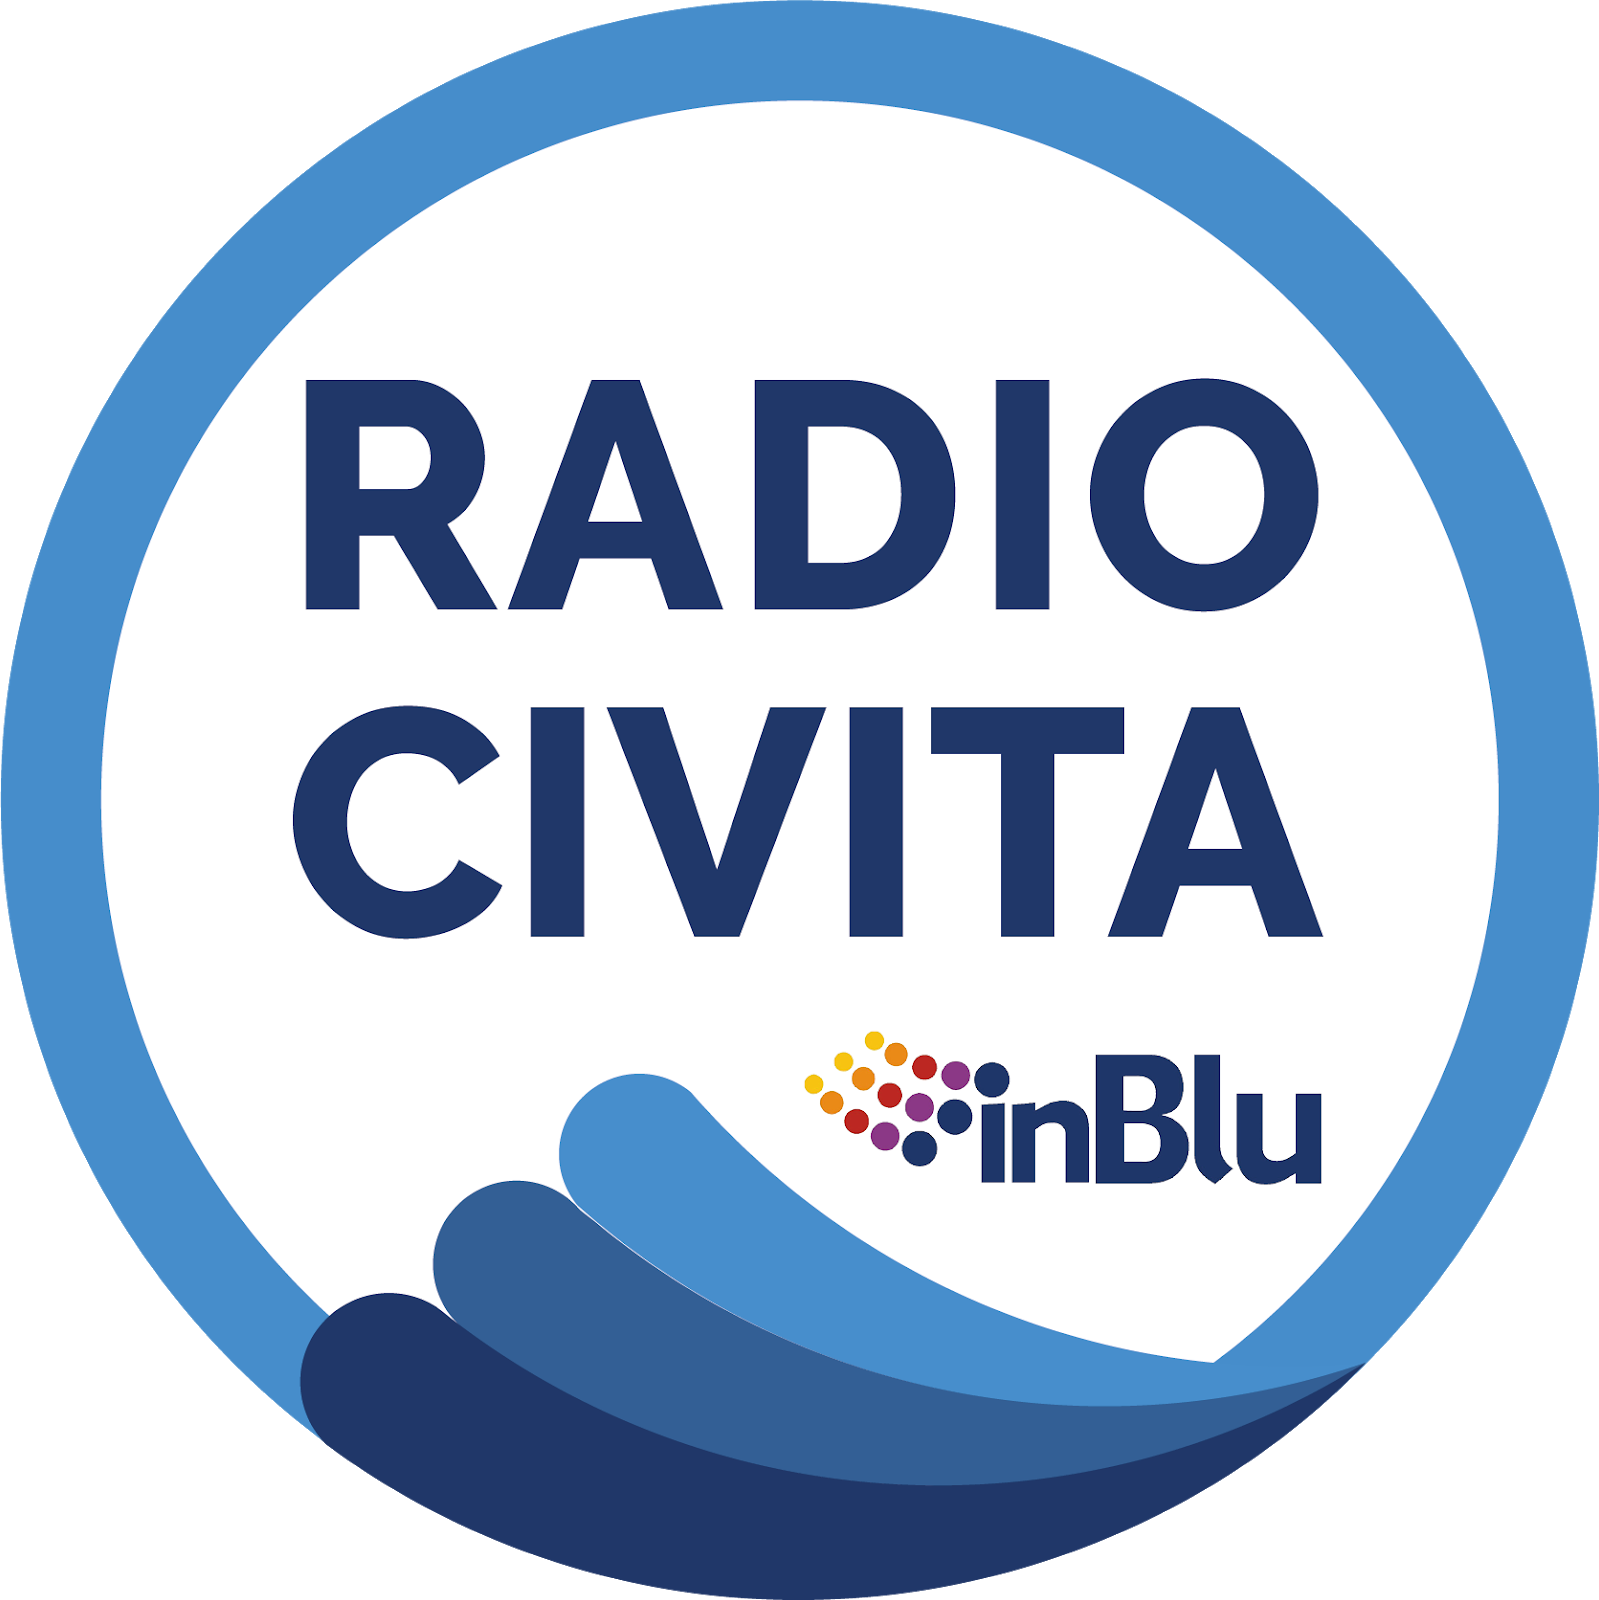 Radio Civita inBlu